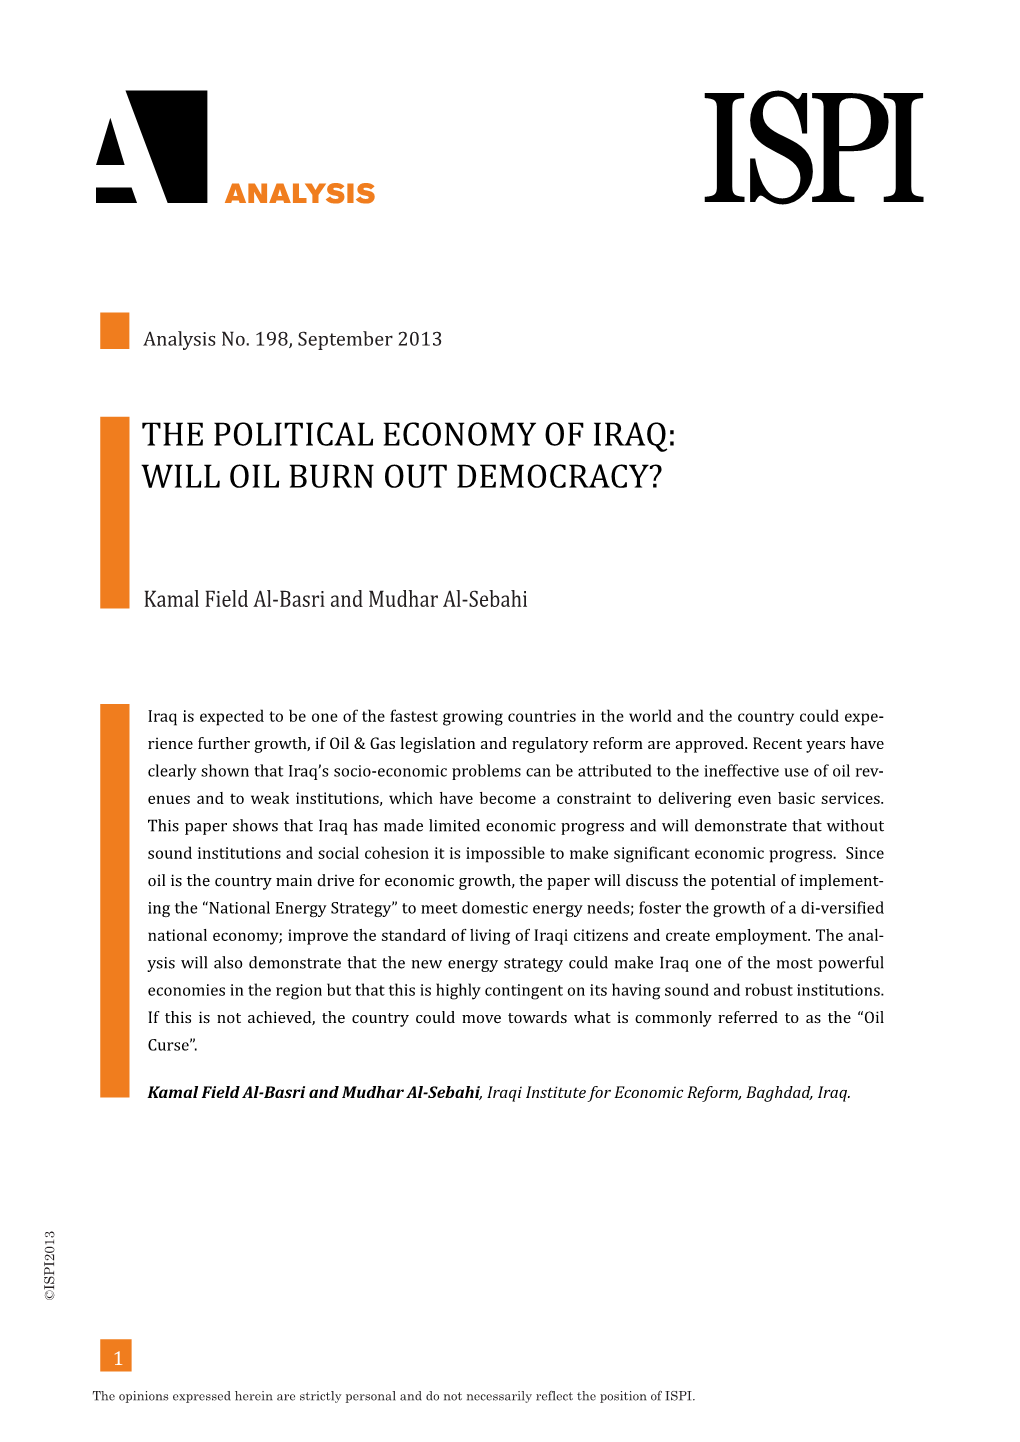 The Political Economy of Iraq